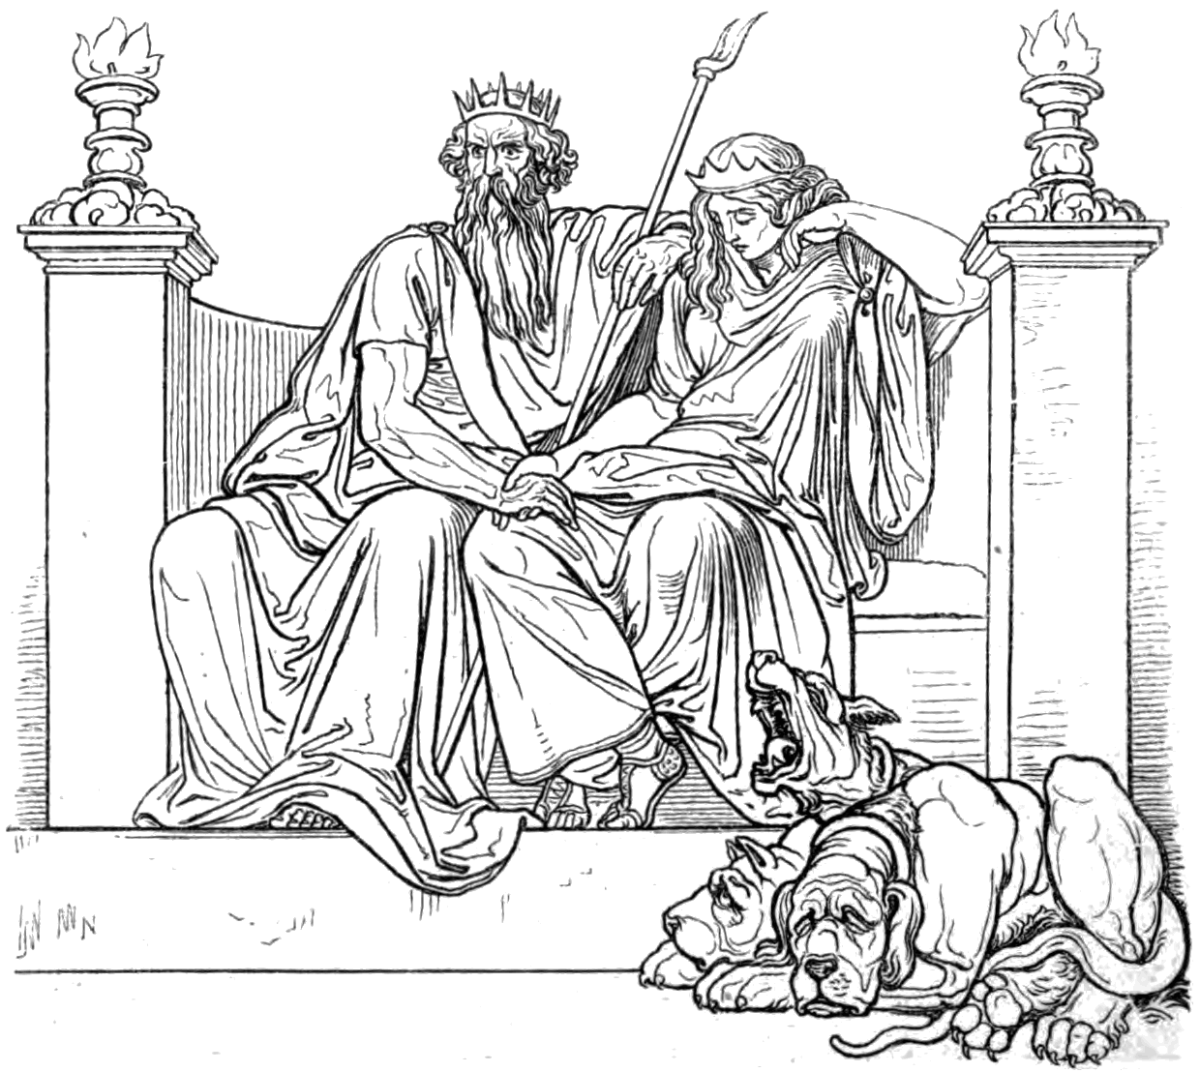 Hades, Persephone, and Cerberus in the Underworld.